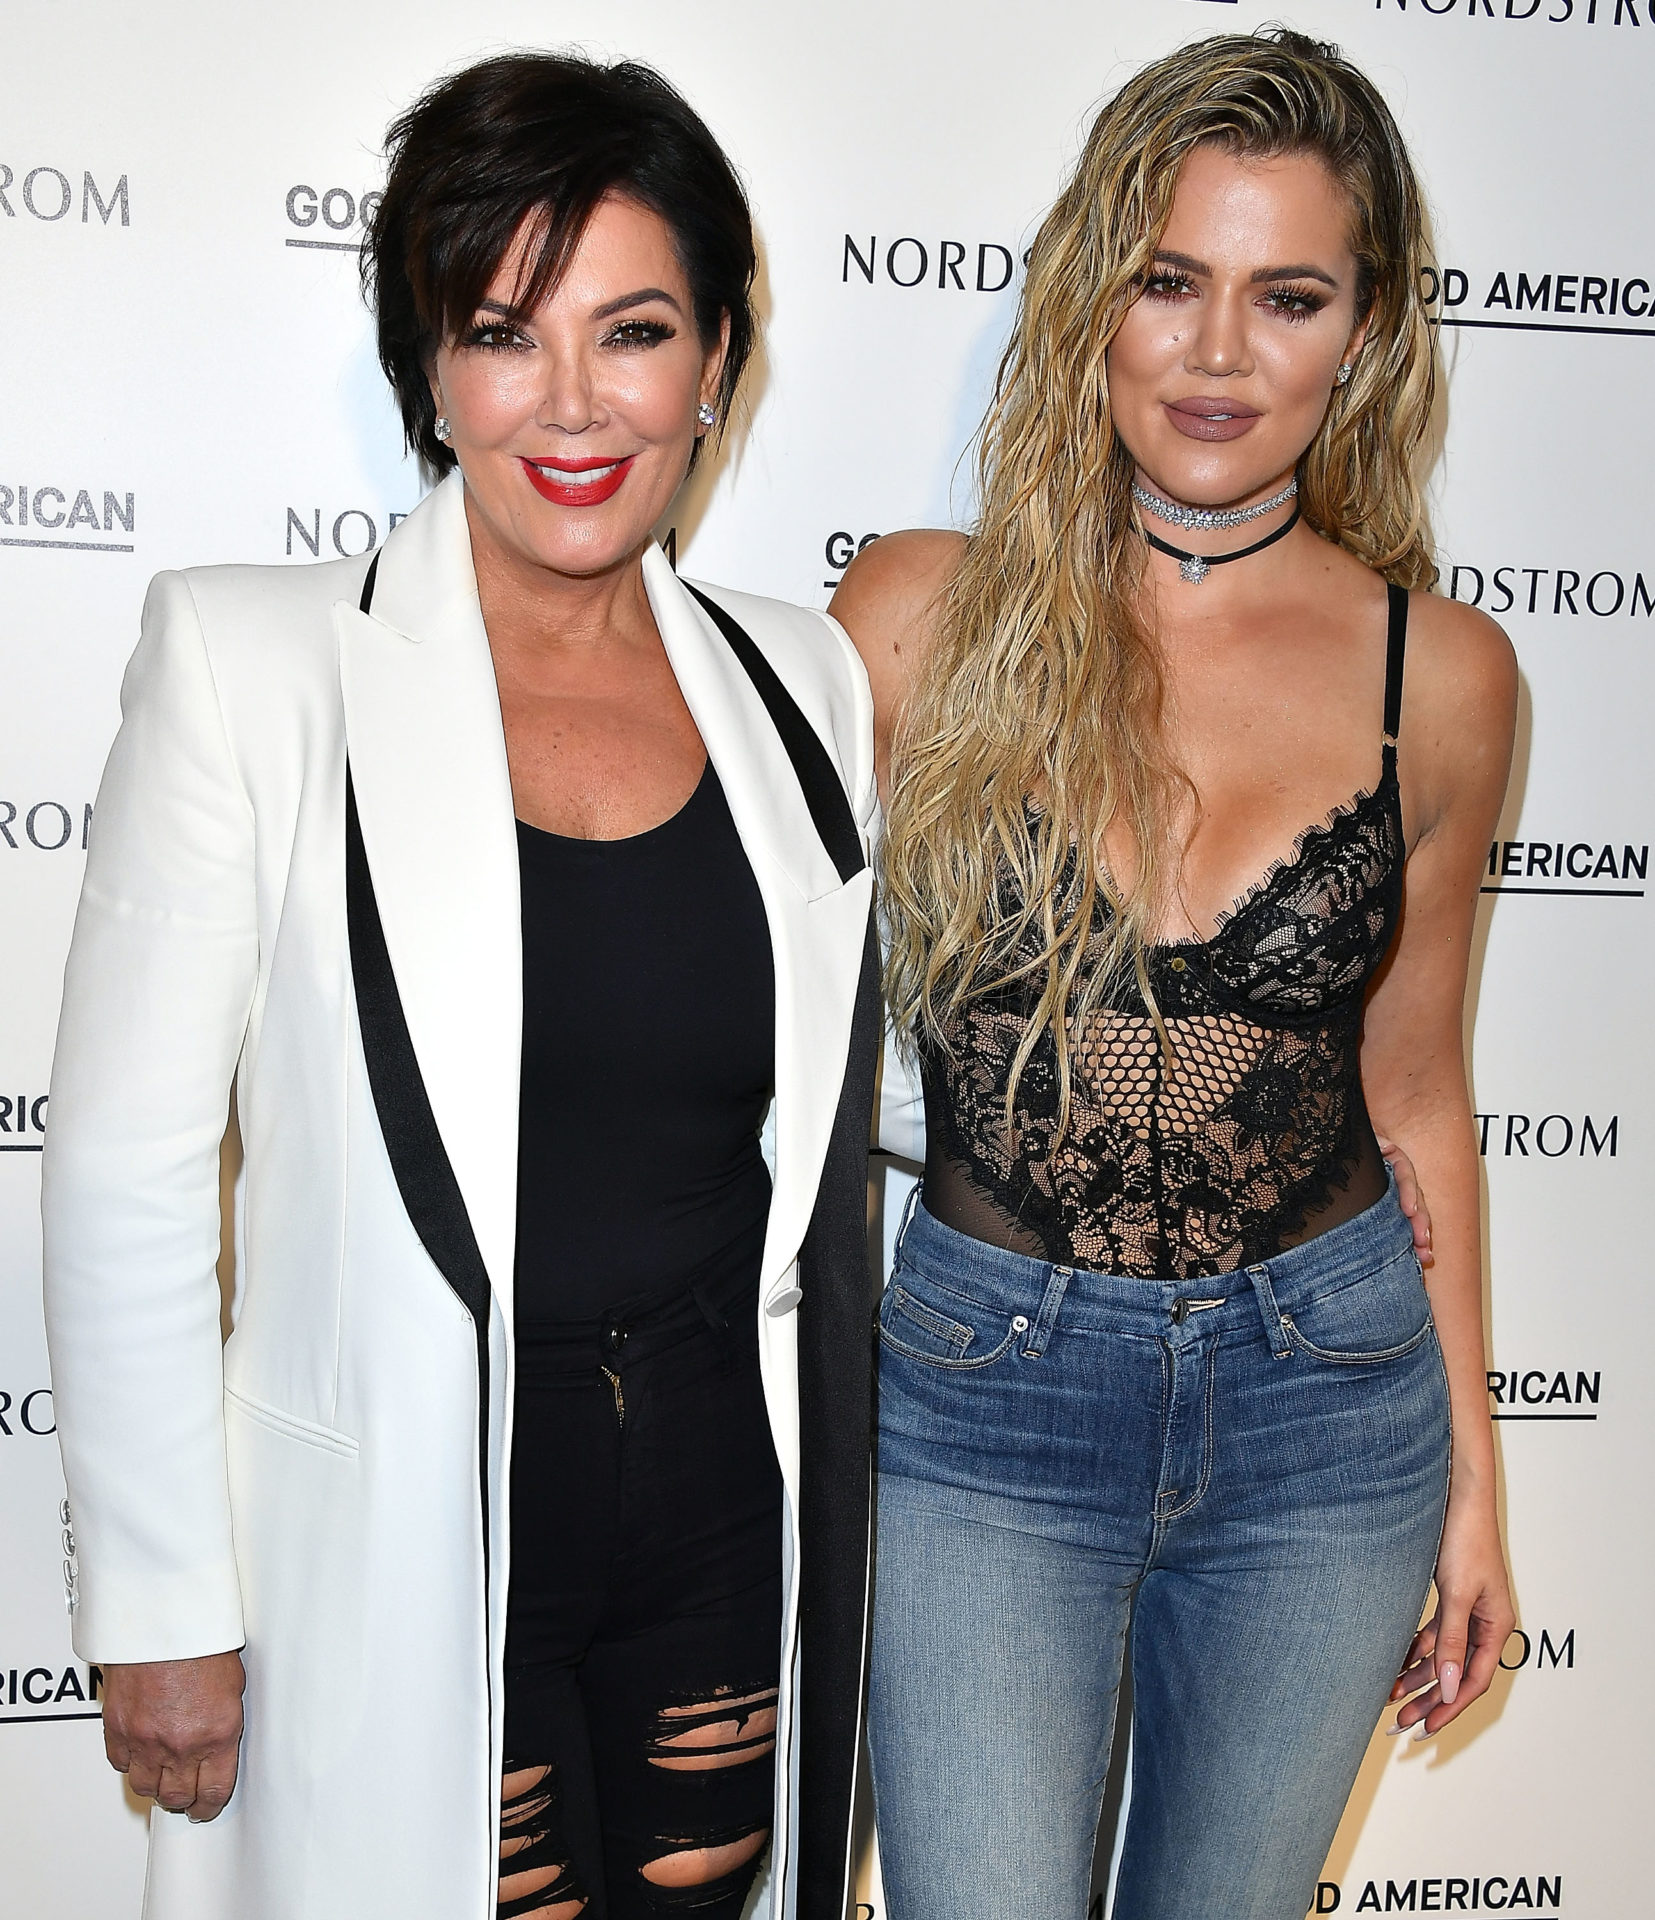 Khloe Kardashian Good American Launch Event